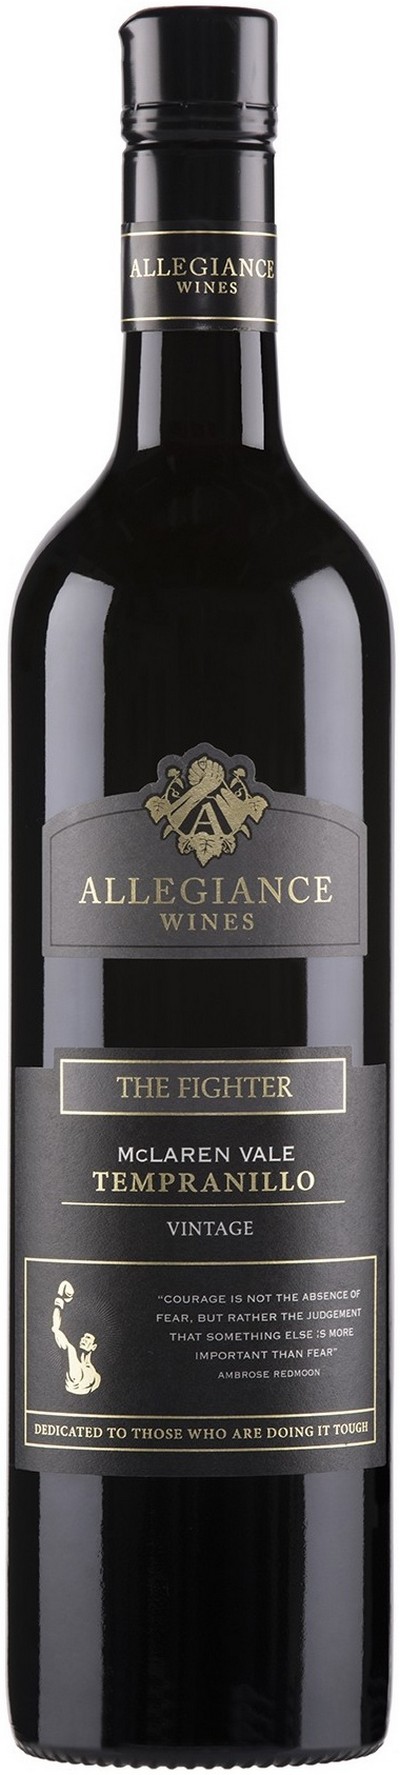 allegiance-wines-the-fighter-mclaren-vale-tempranillo-2015